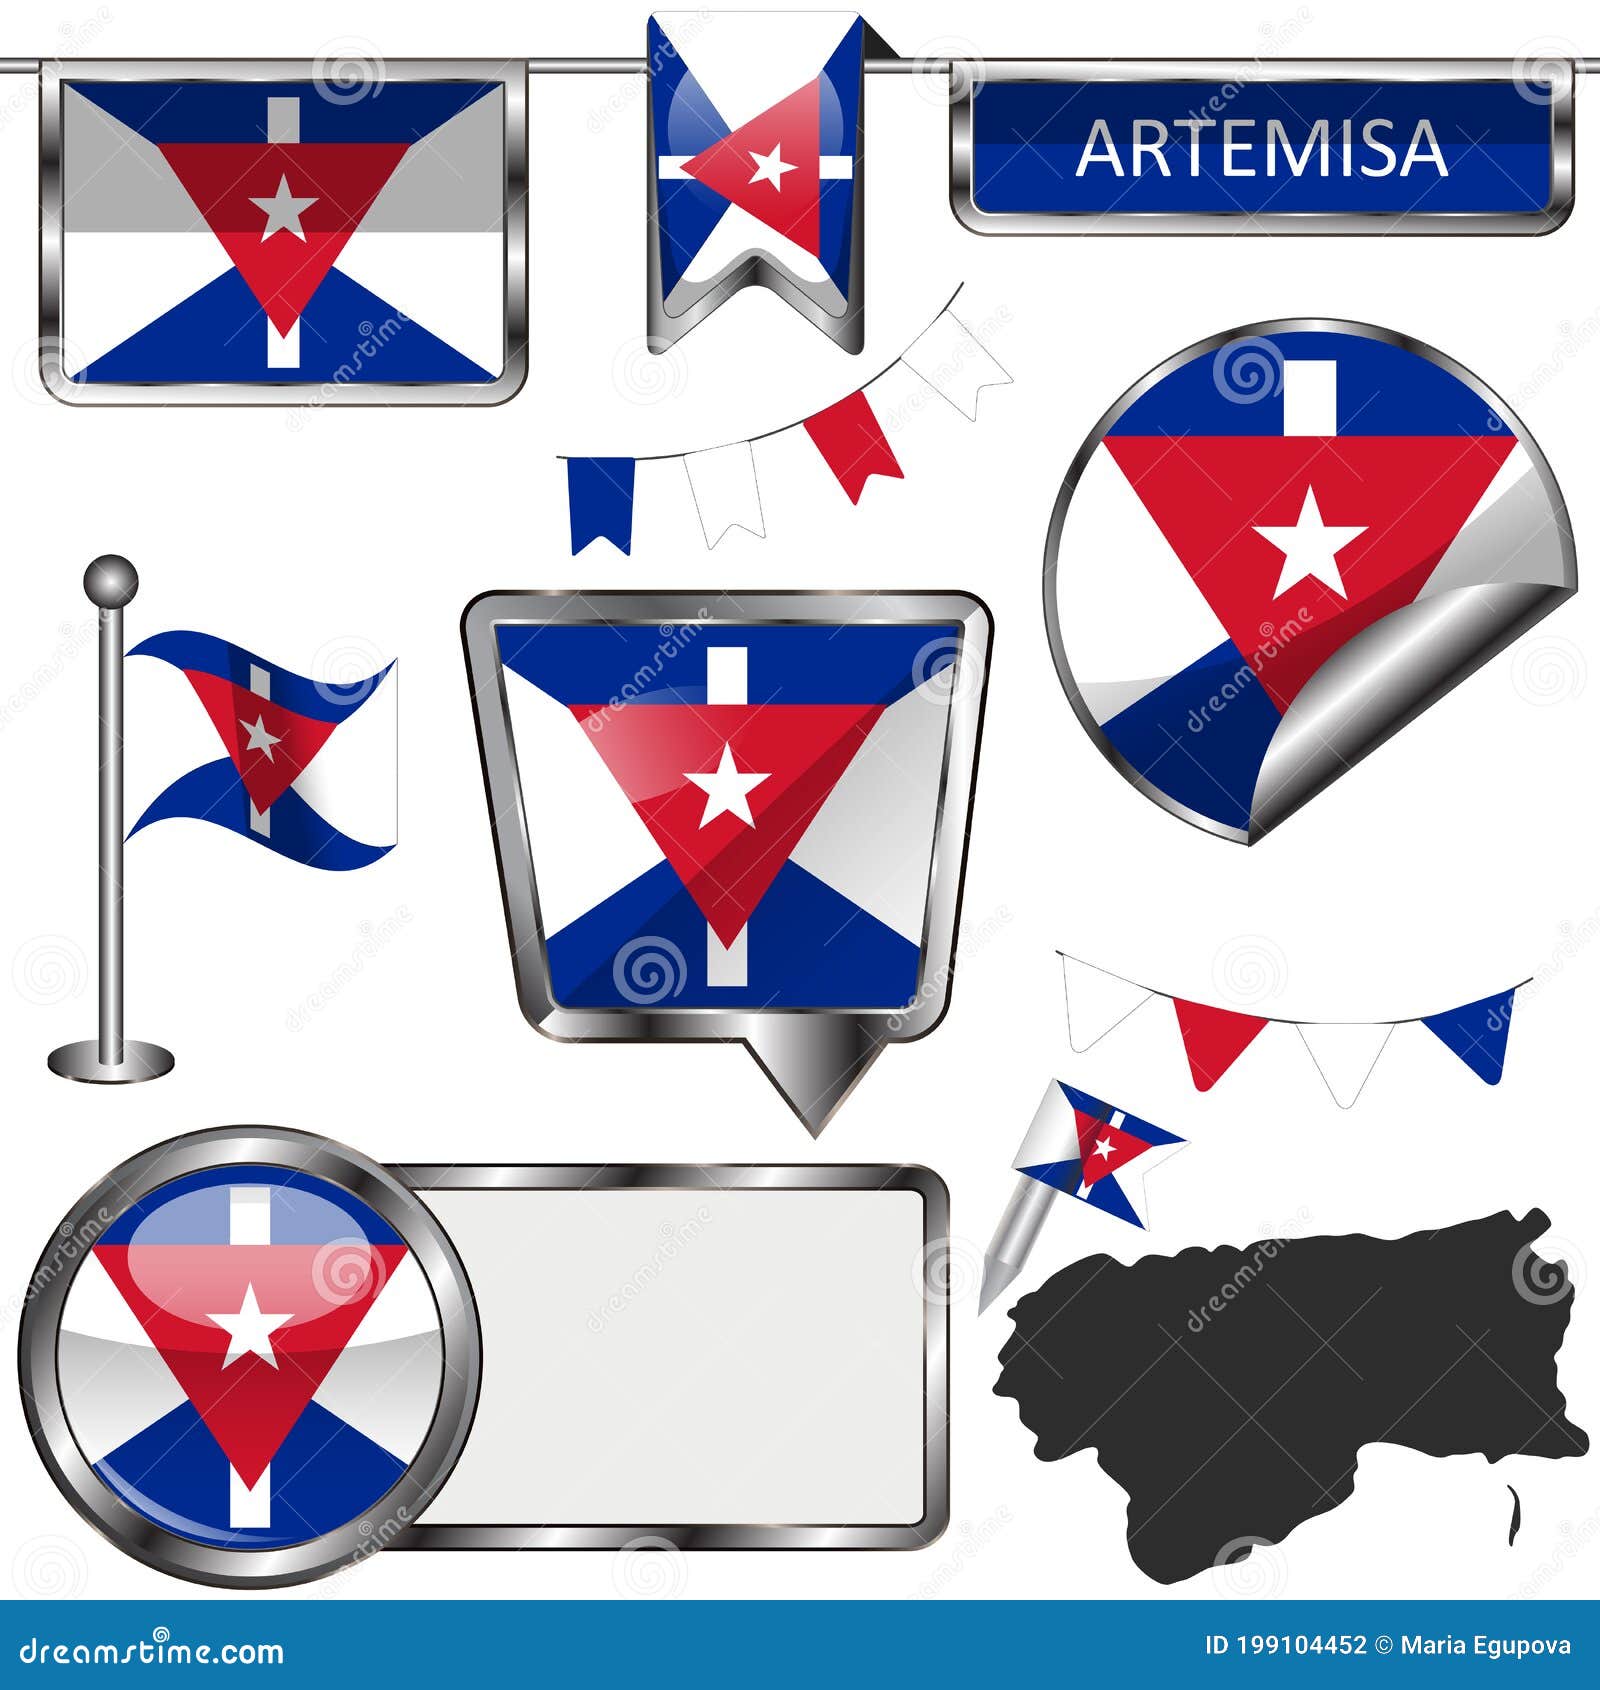 glossy flags of artemisa, cuba